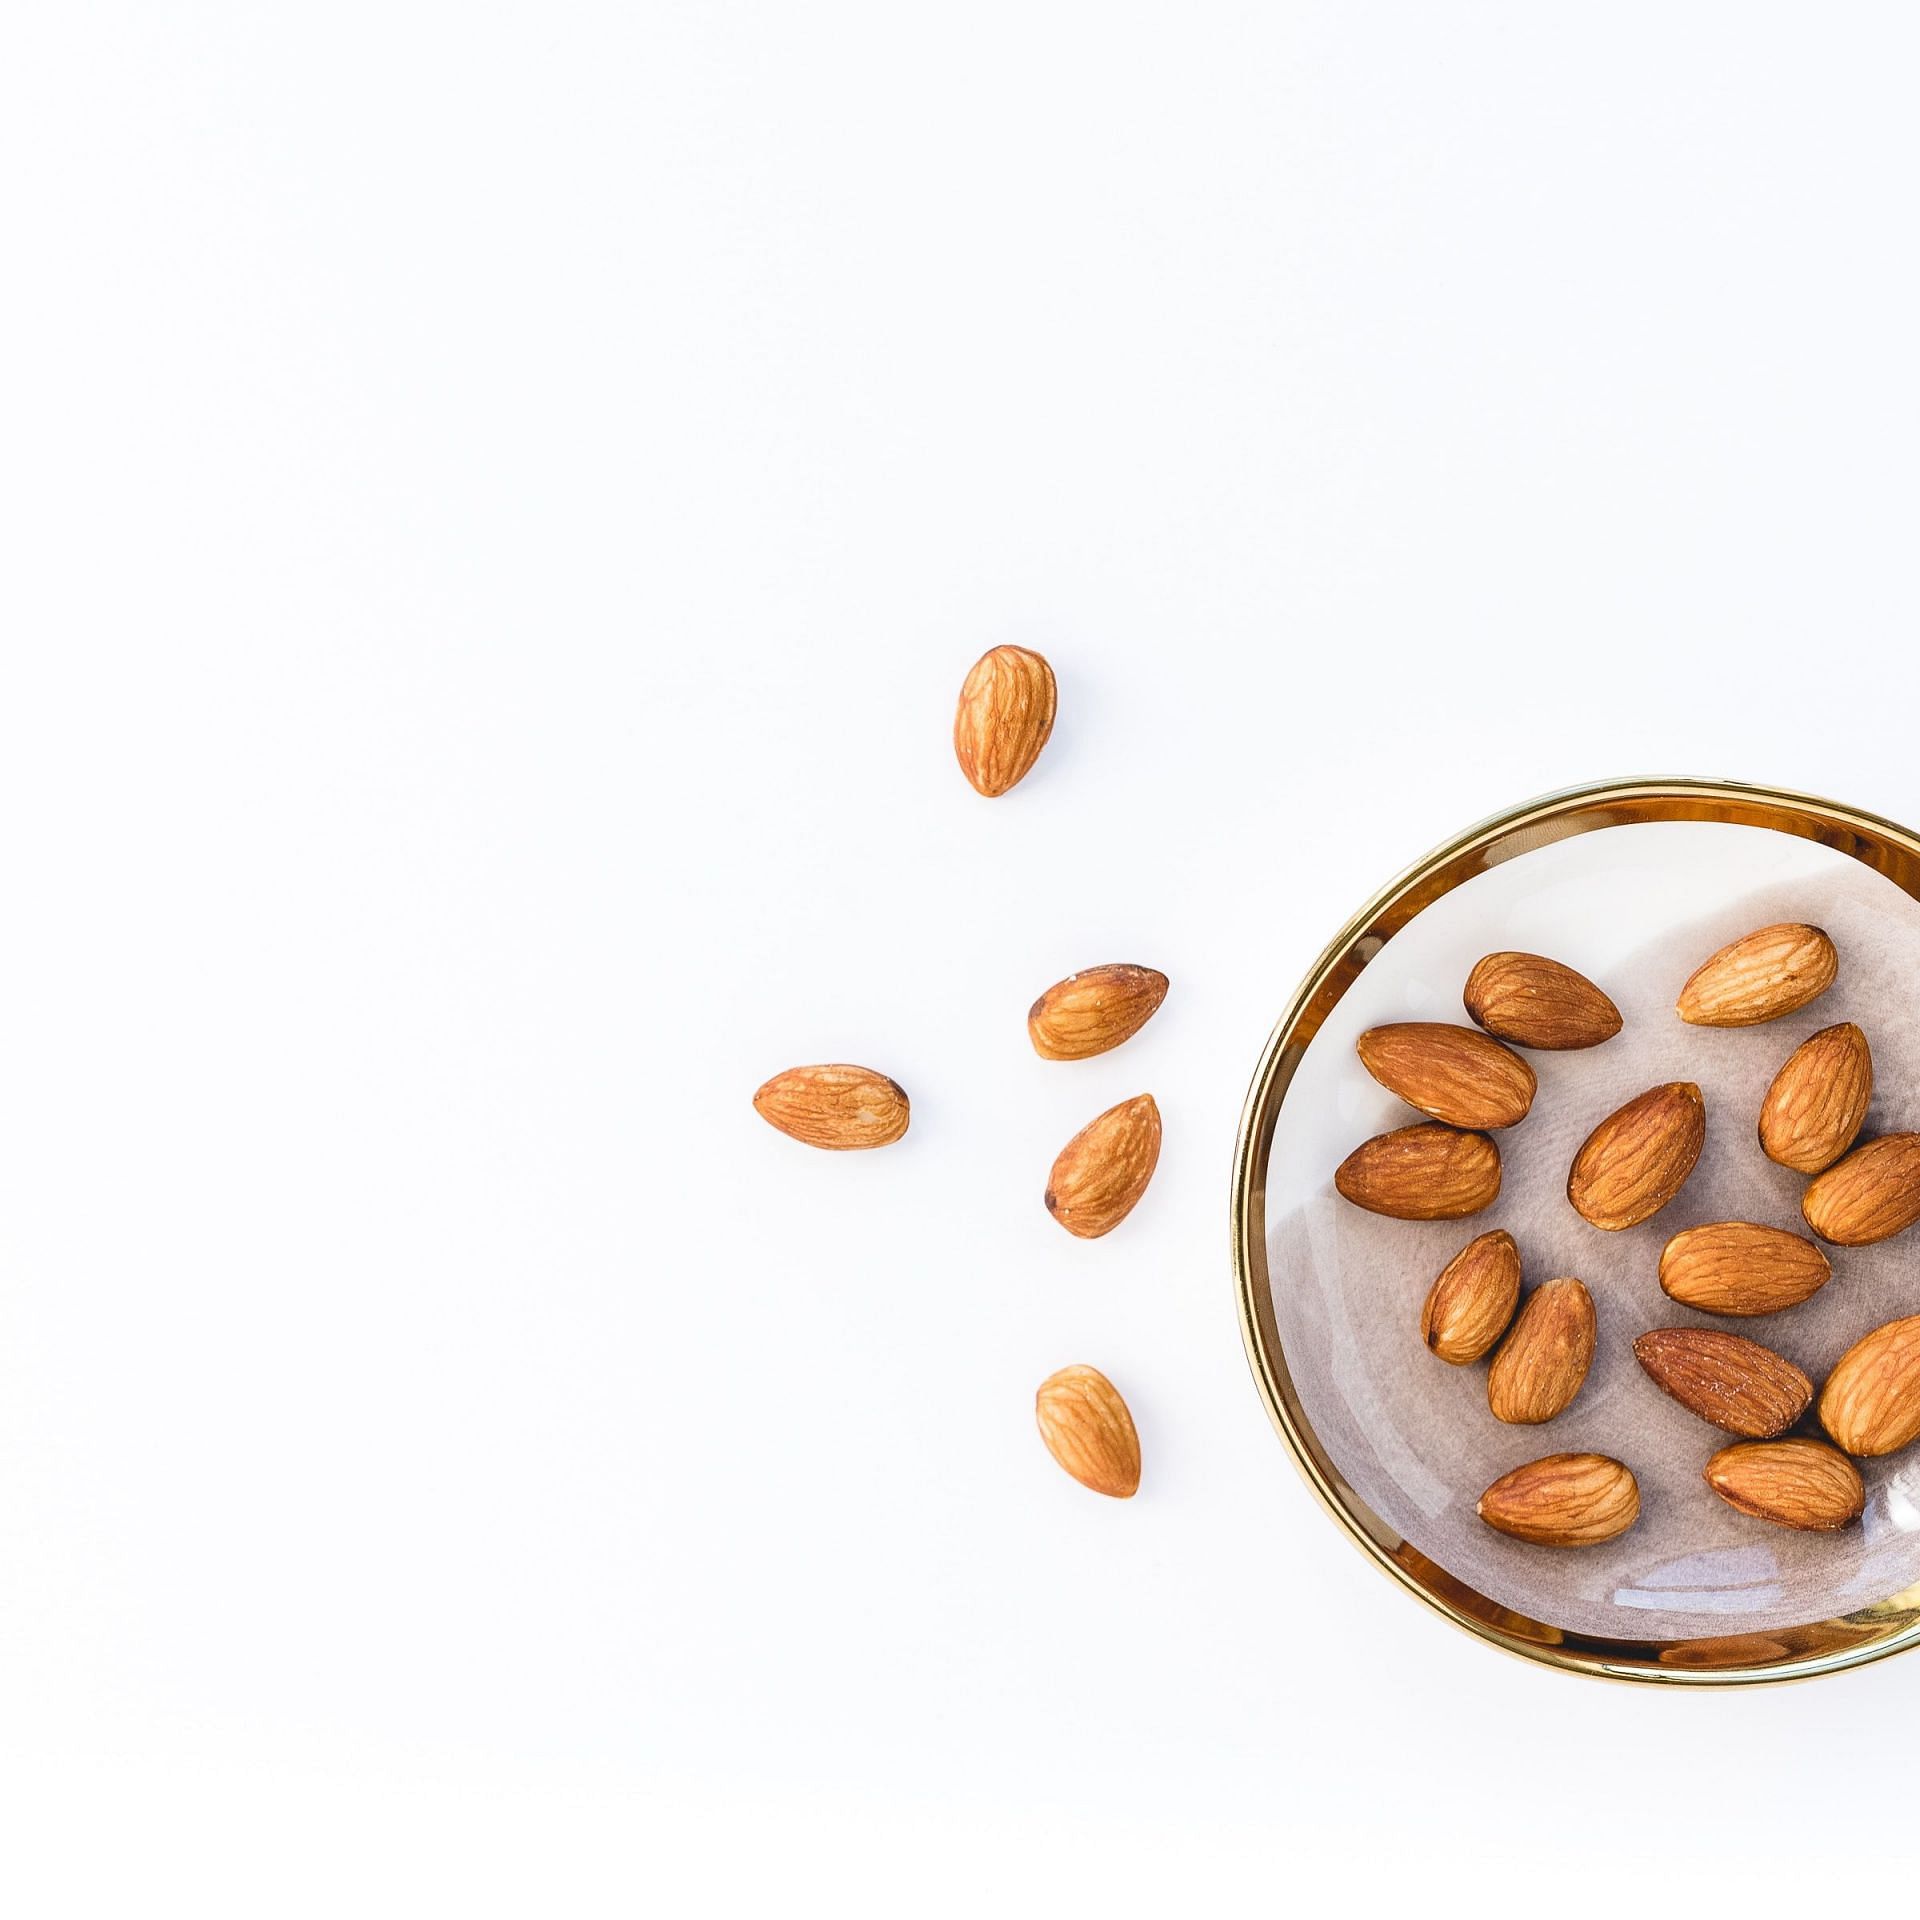 It almond skin edible? (Image via Unsplash/Hayley Maxwell)